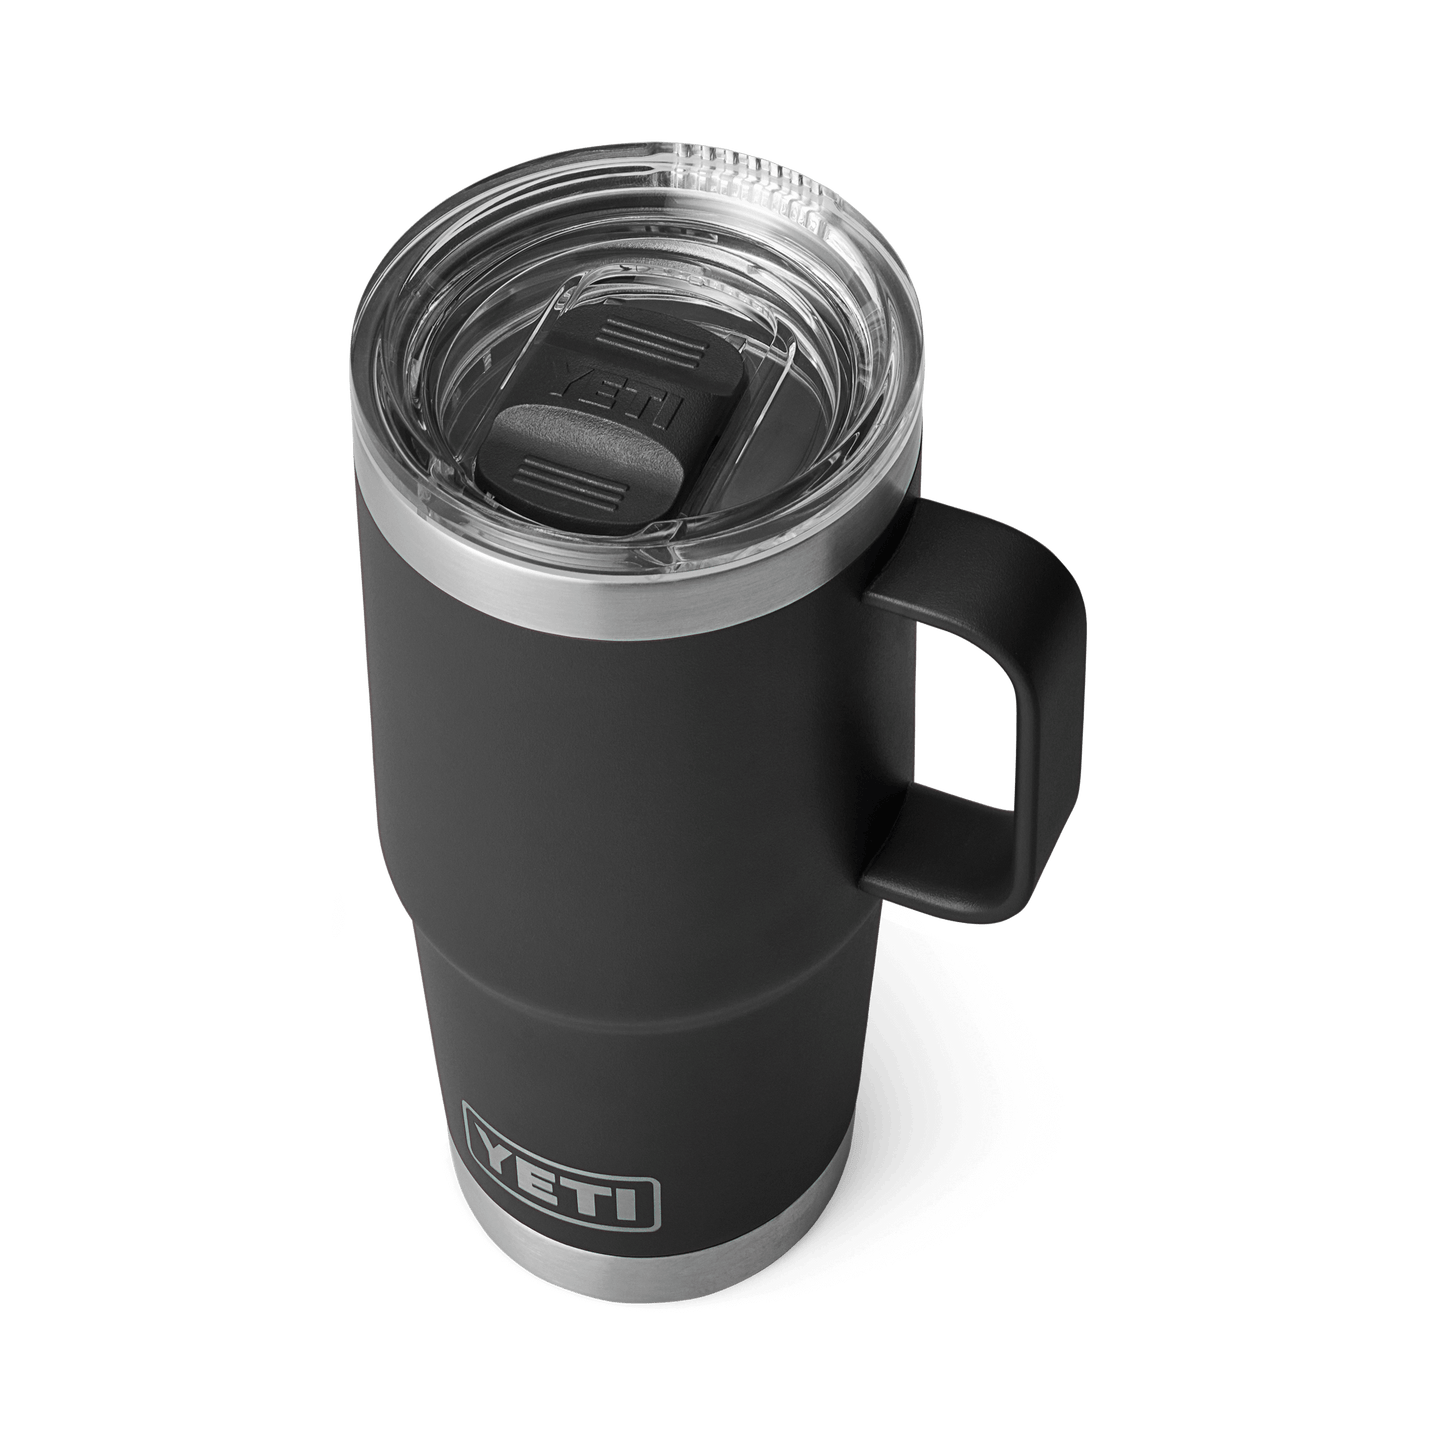 Rambler® 20 oz. Travel Mug